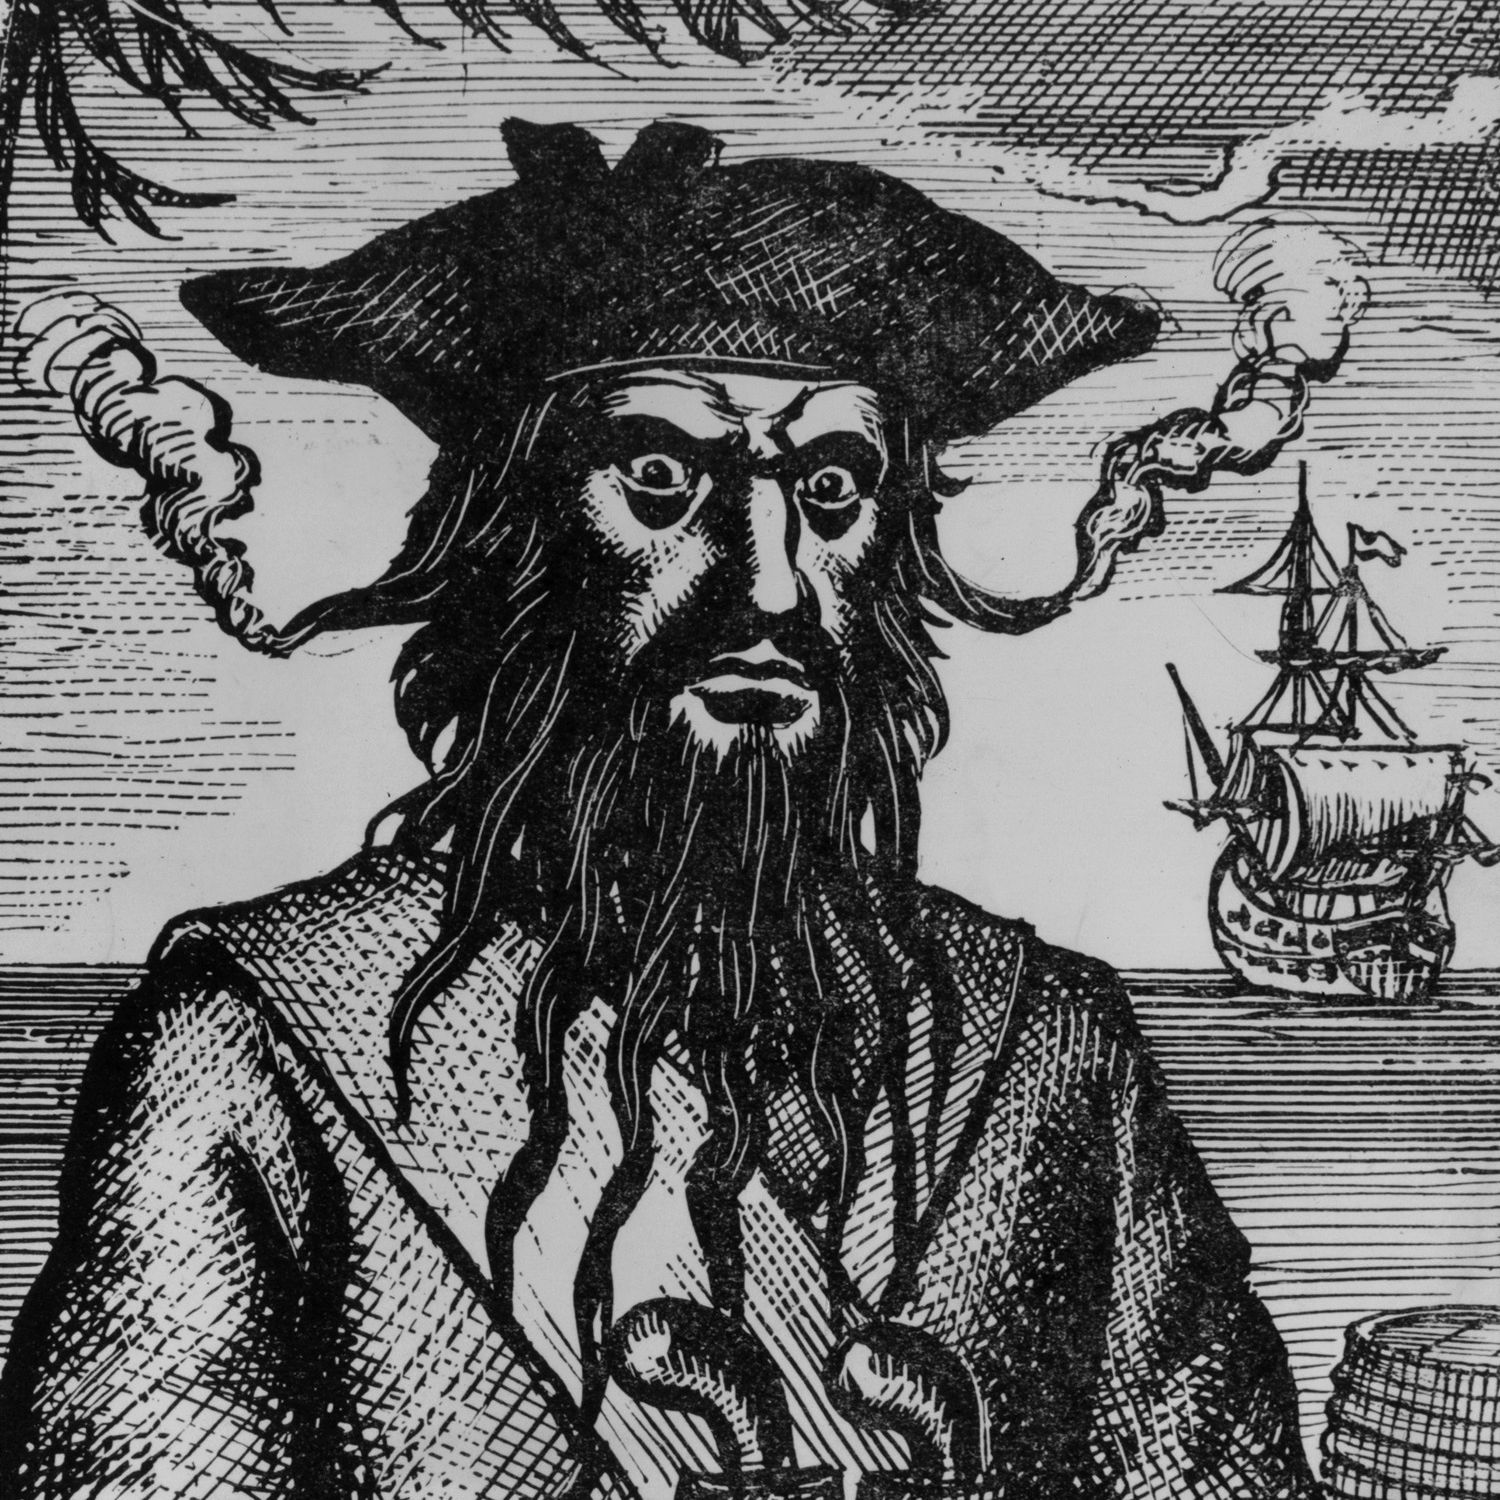 an illustration of captain blackbeard